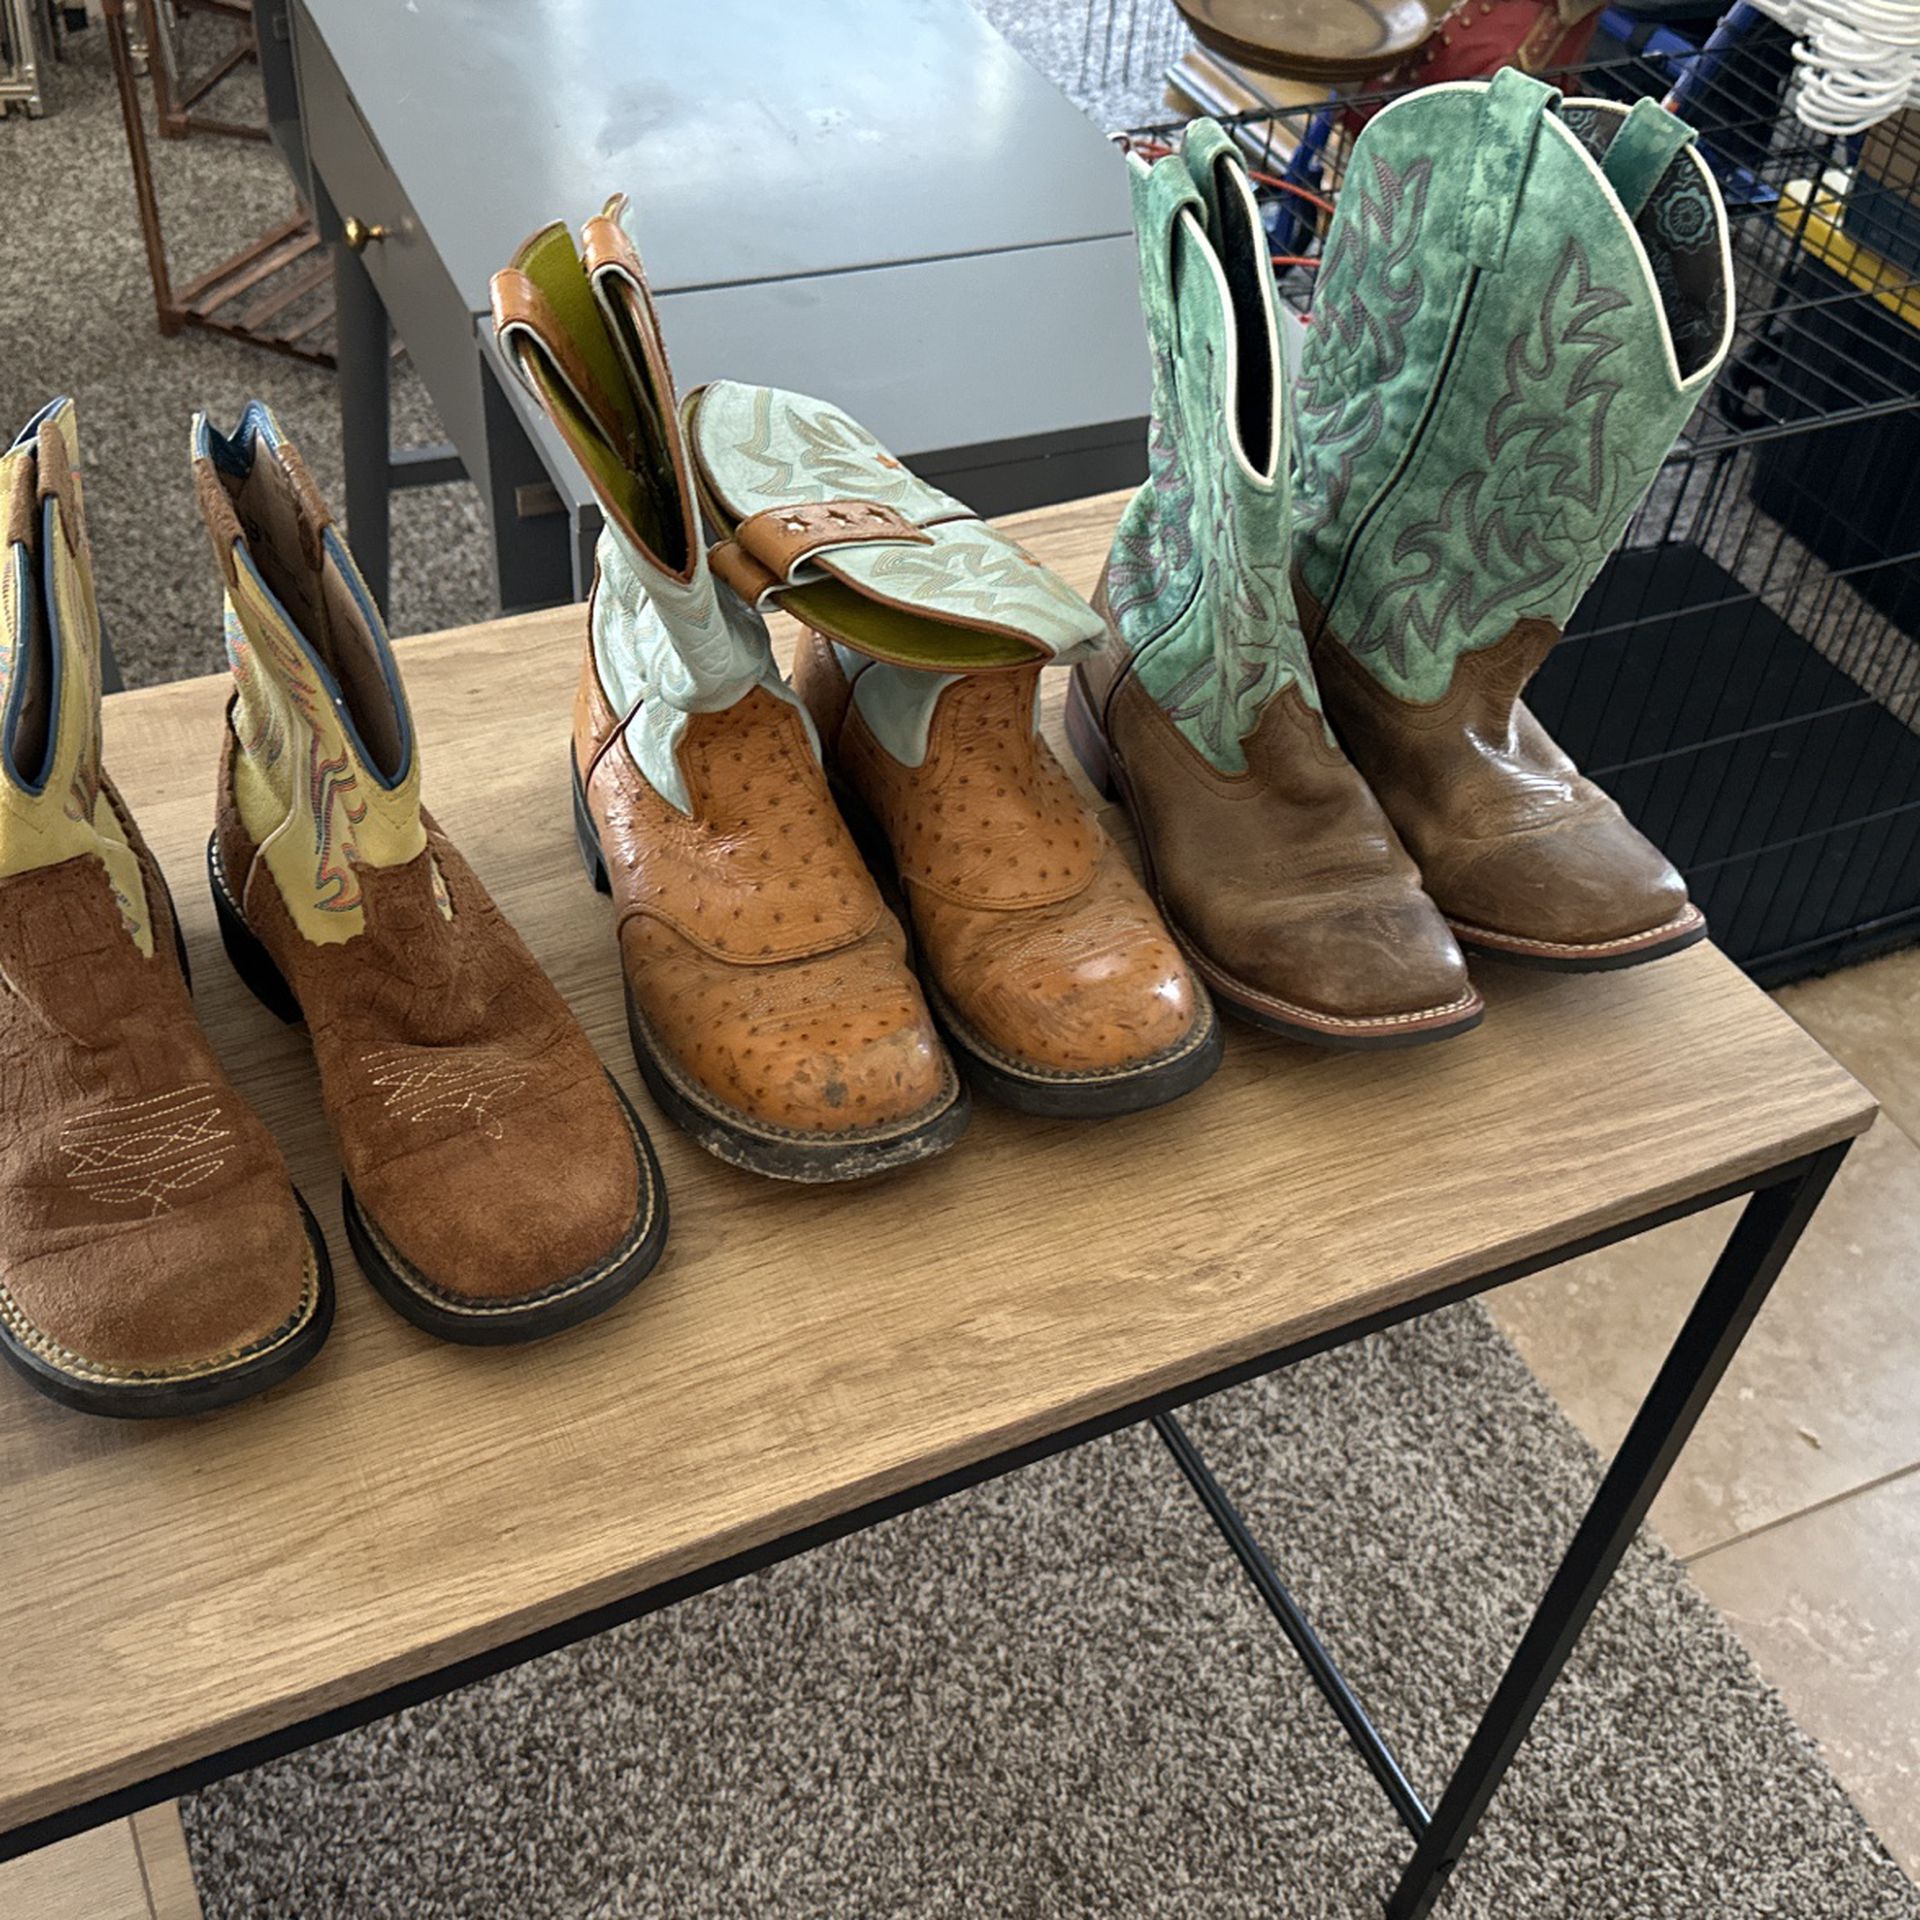 Women’s Cowboy Boots.